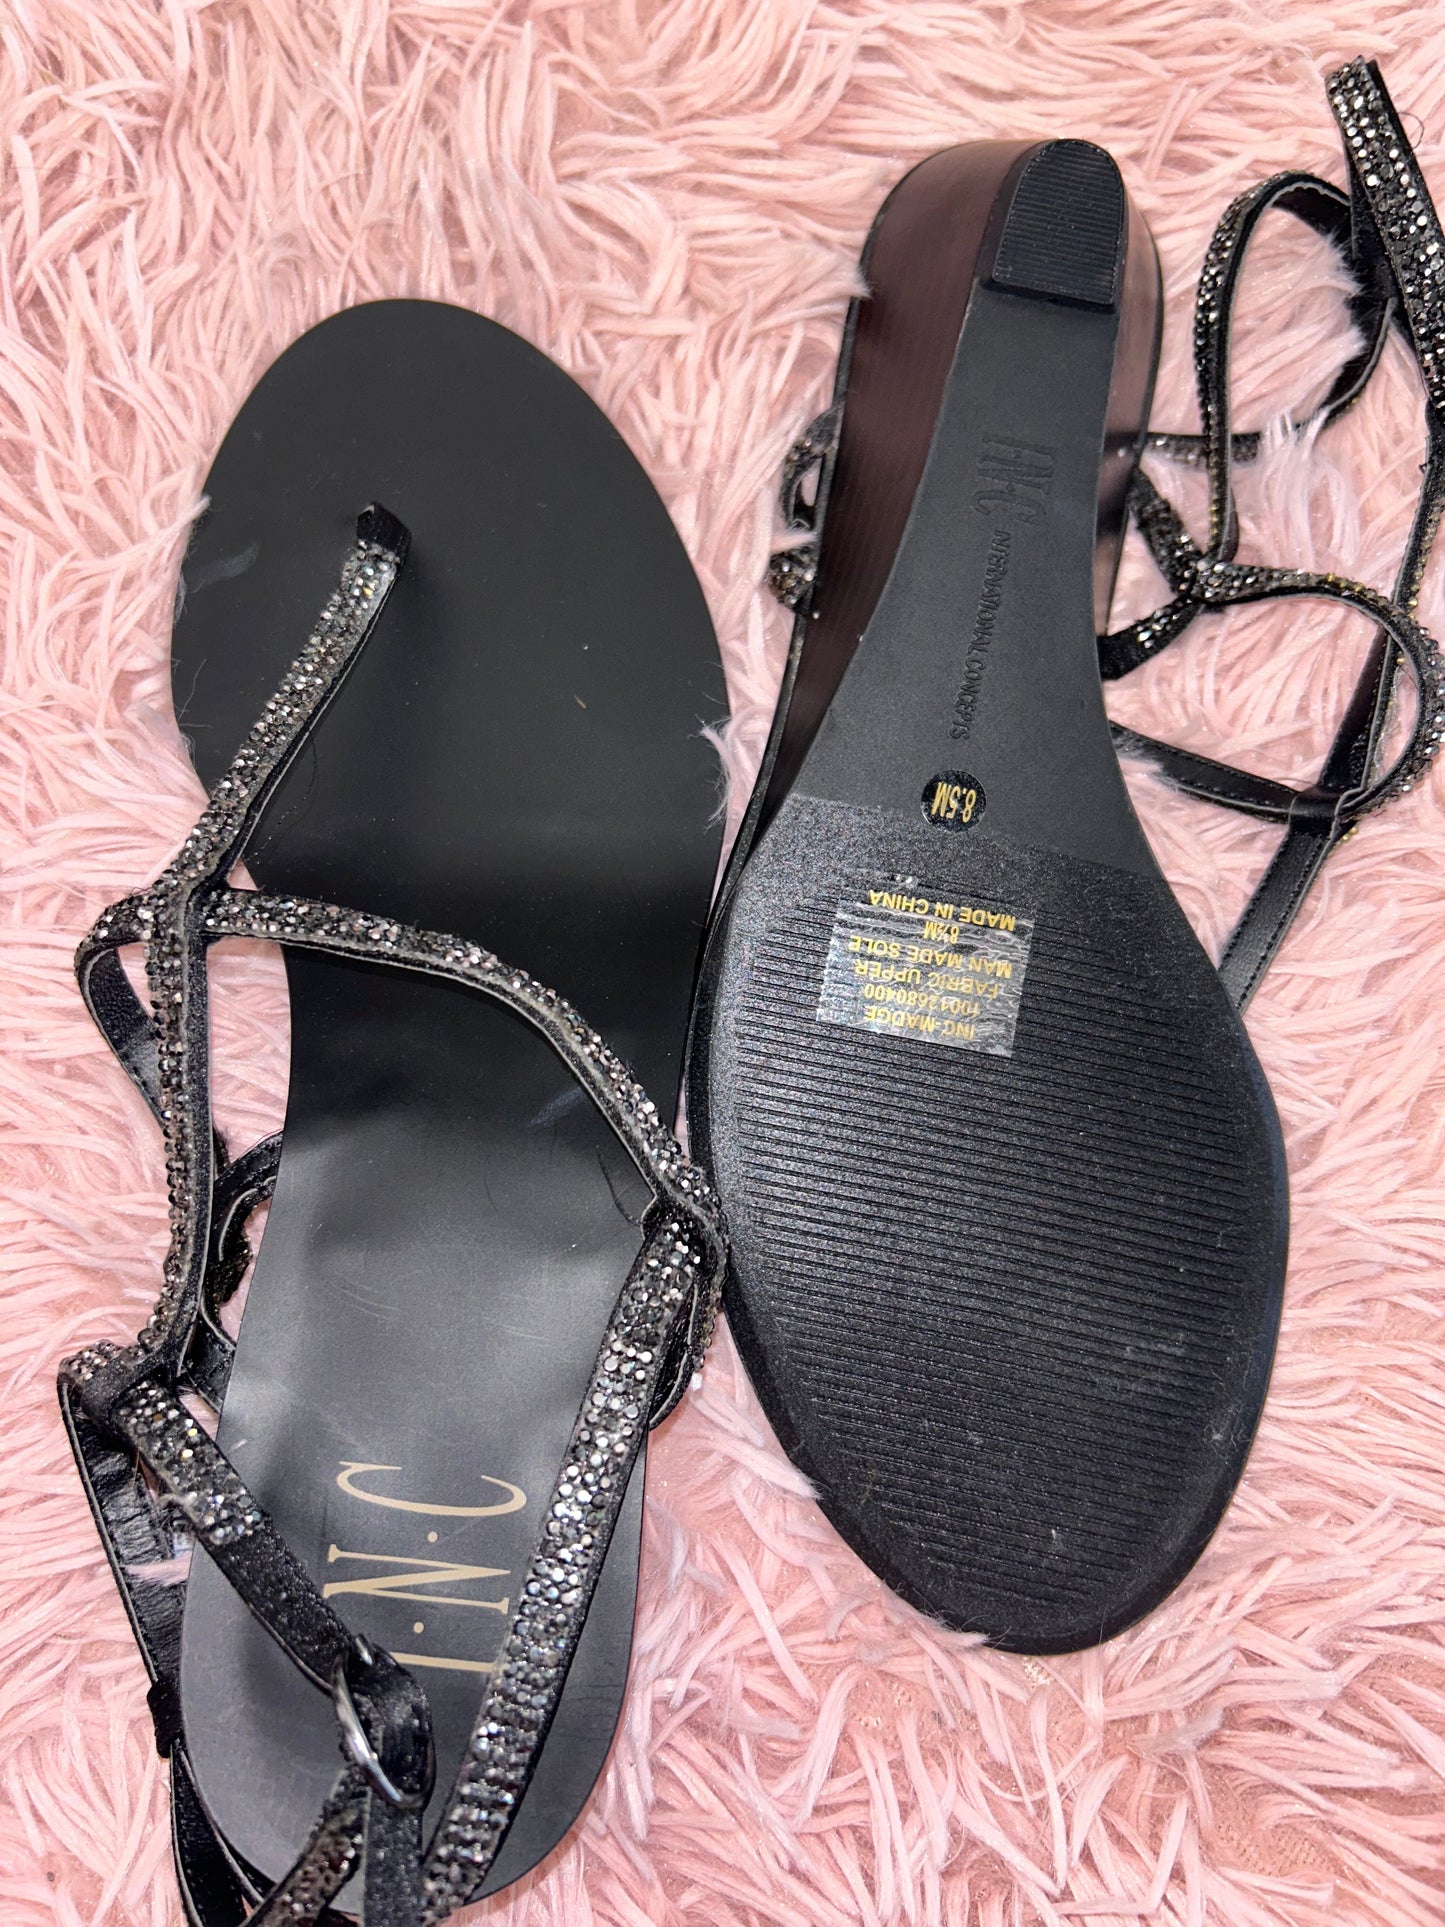 Black Sandals Heels Wedge Inc, Size 8.5